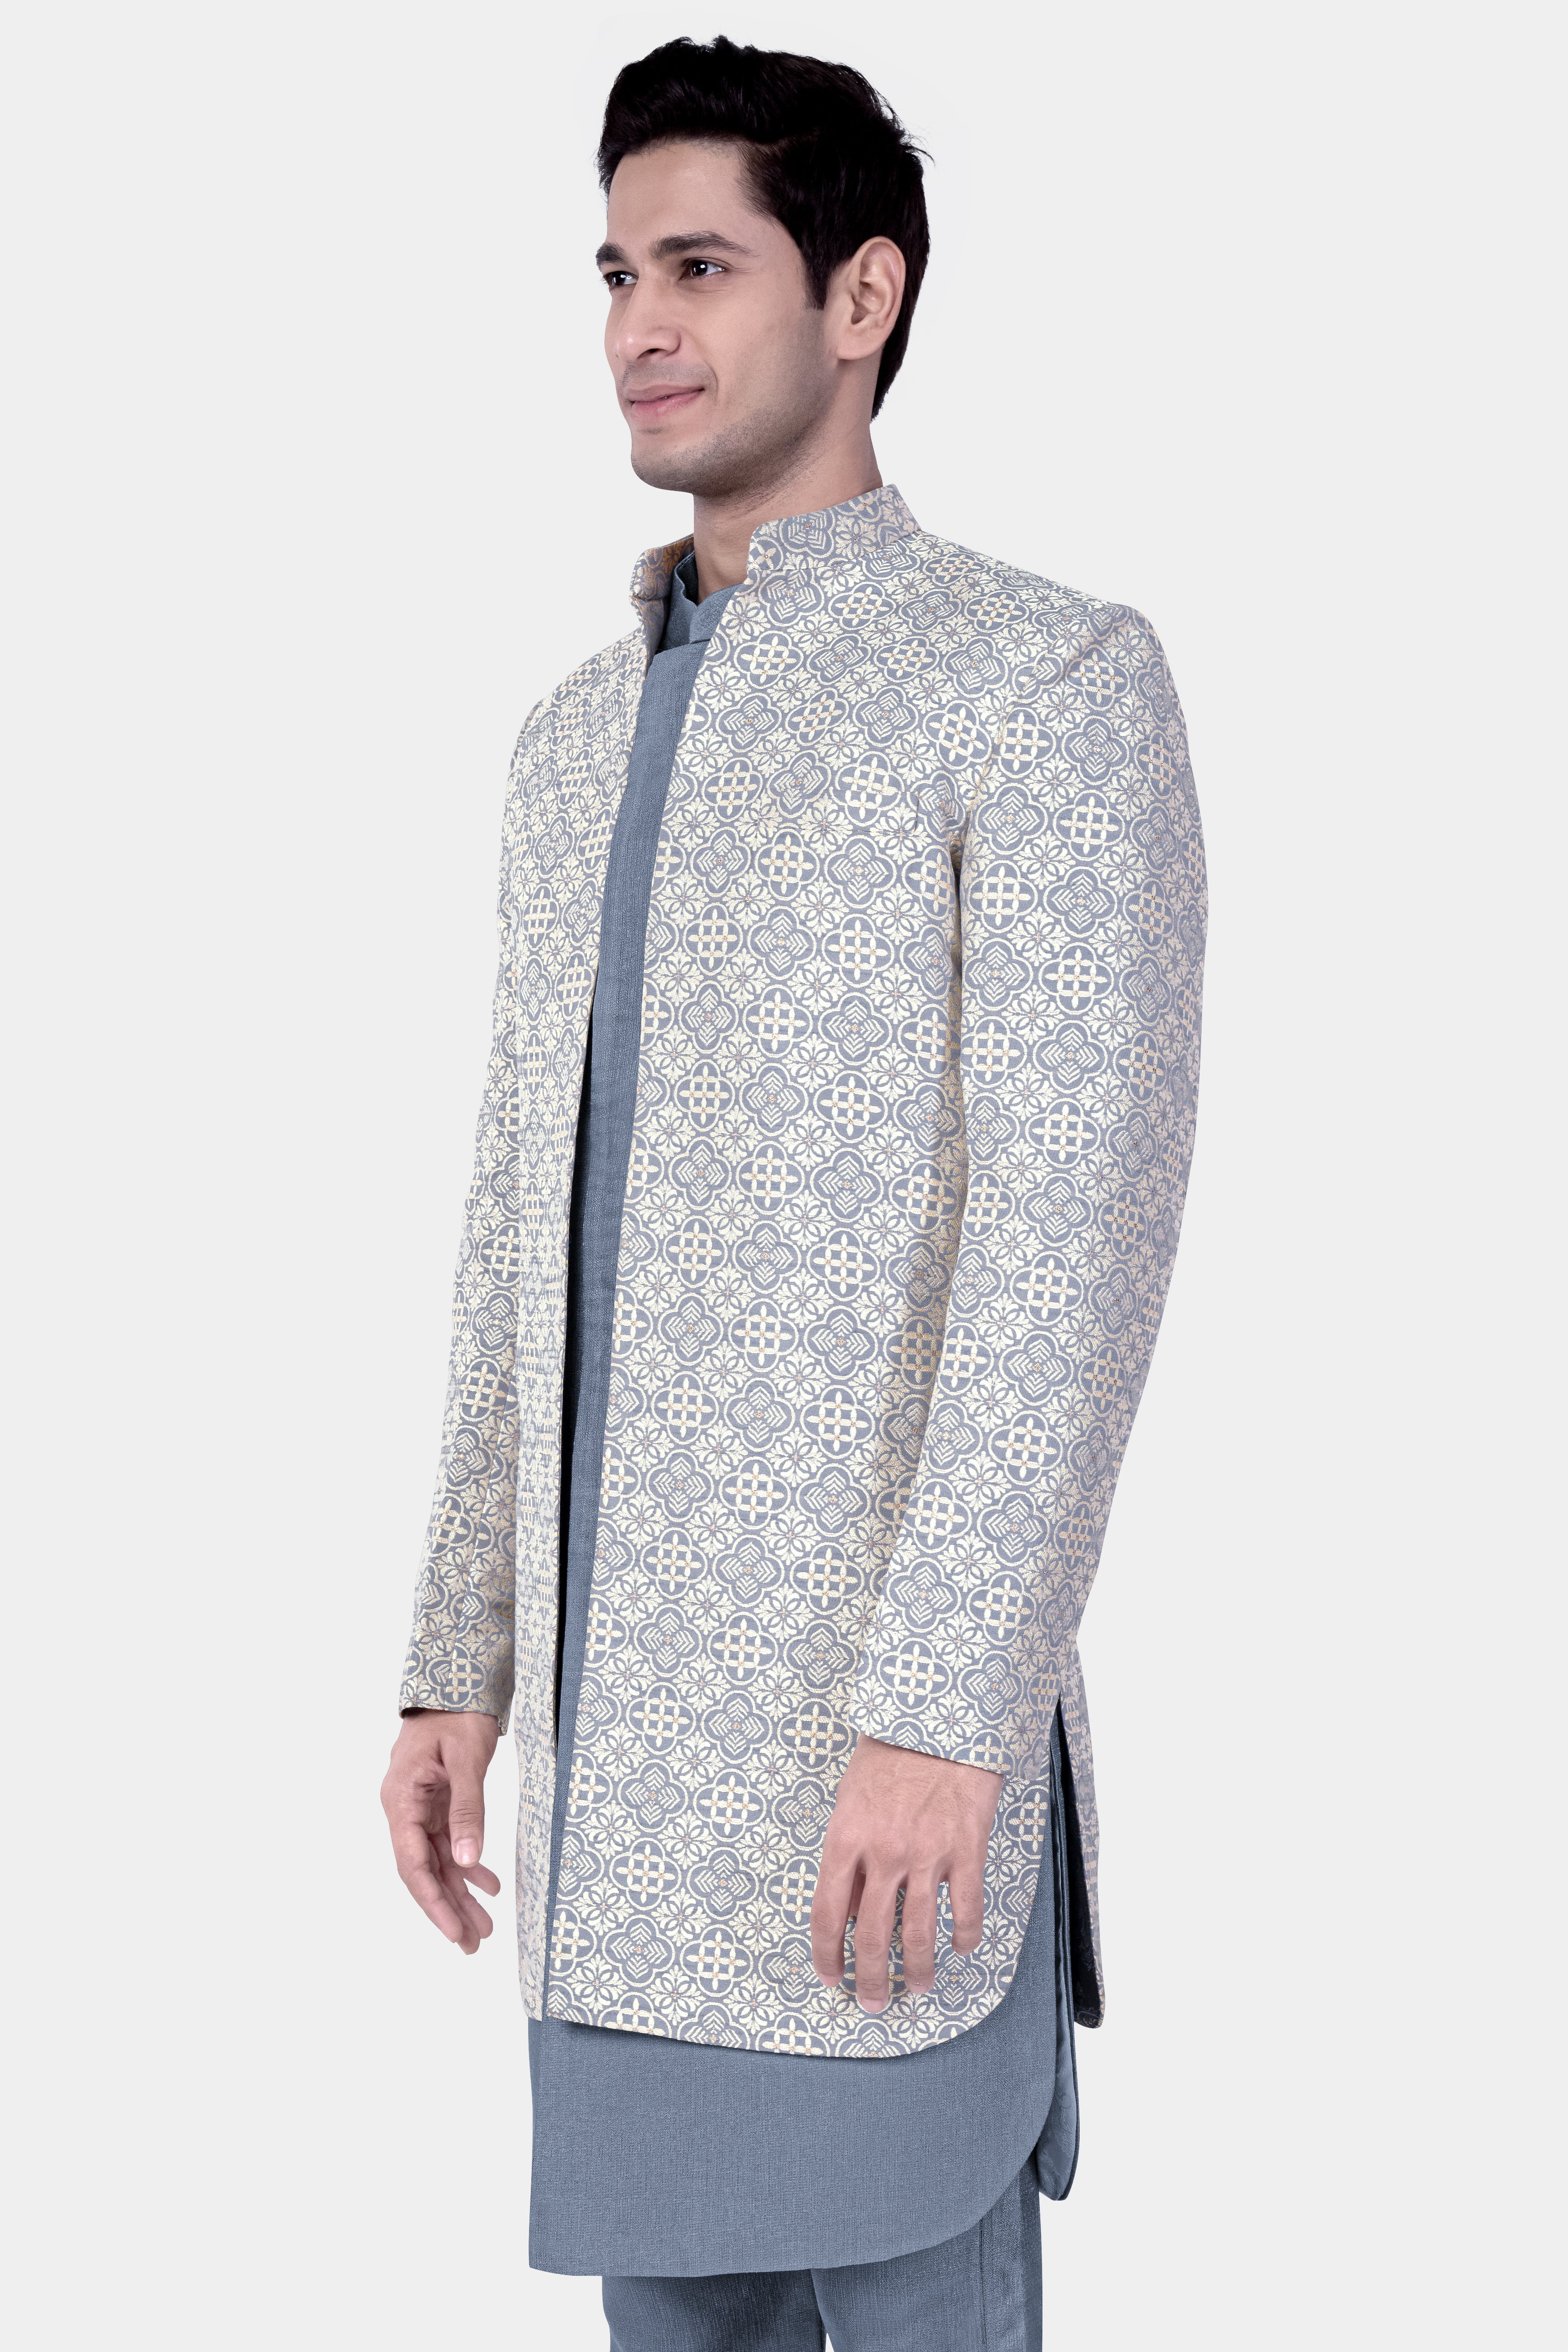 Cadet Blue and White Moroccan Jacquard Textured Designer Indo-Western Set